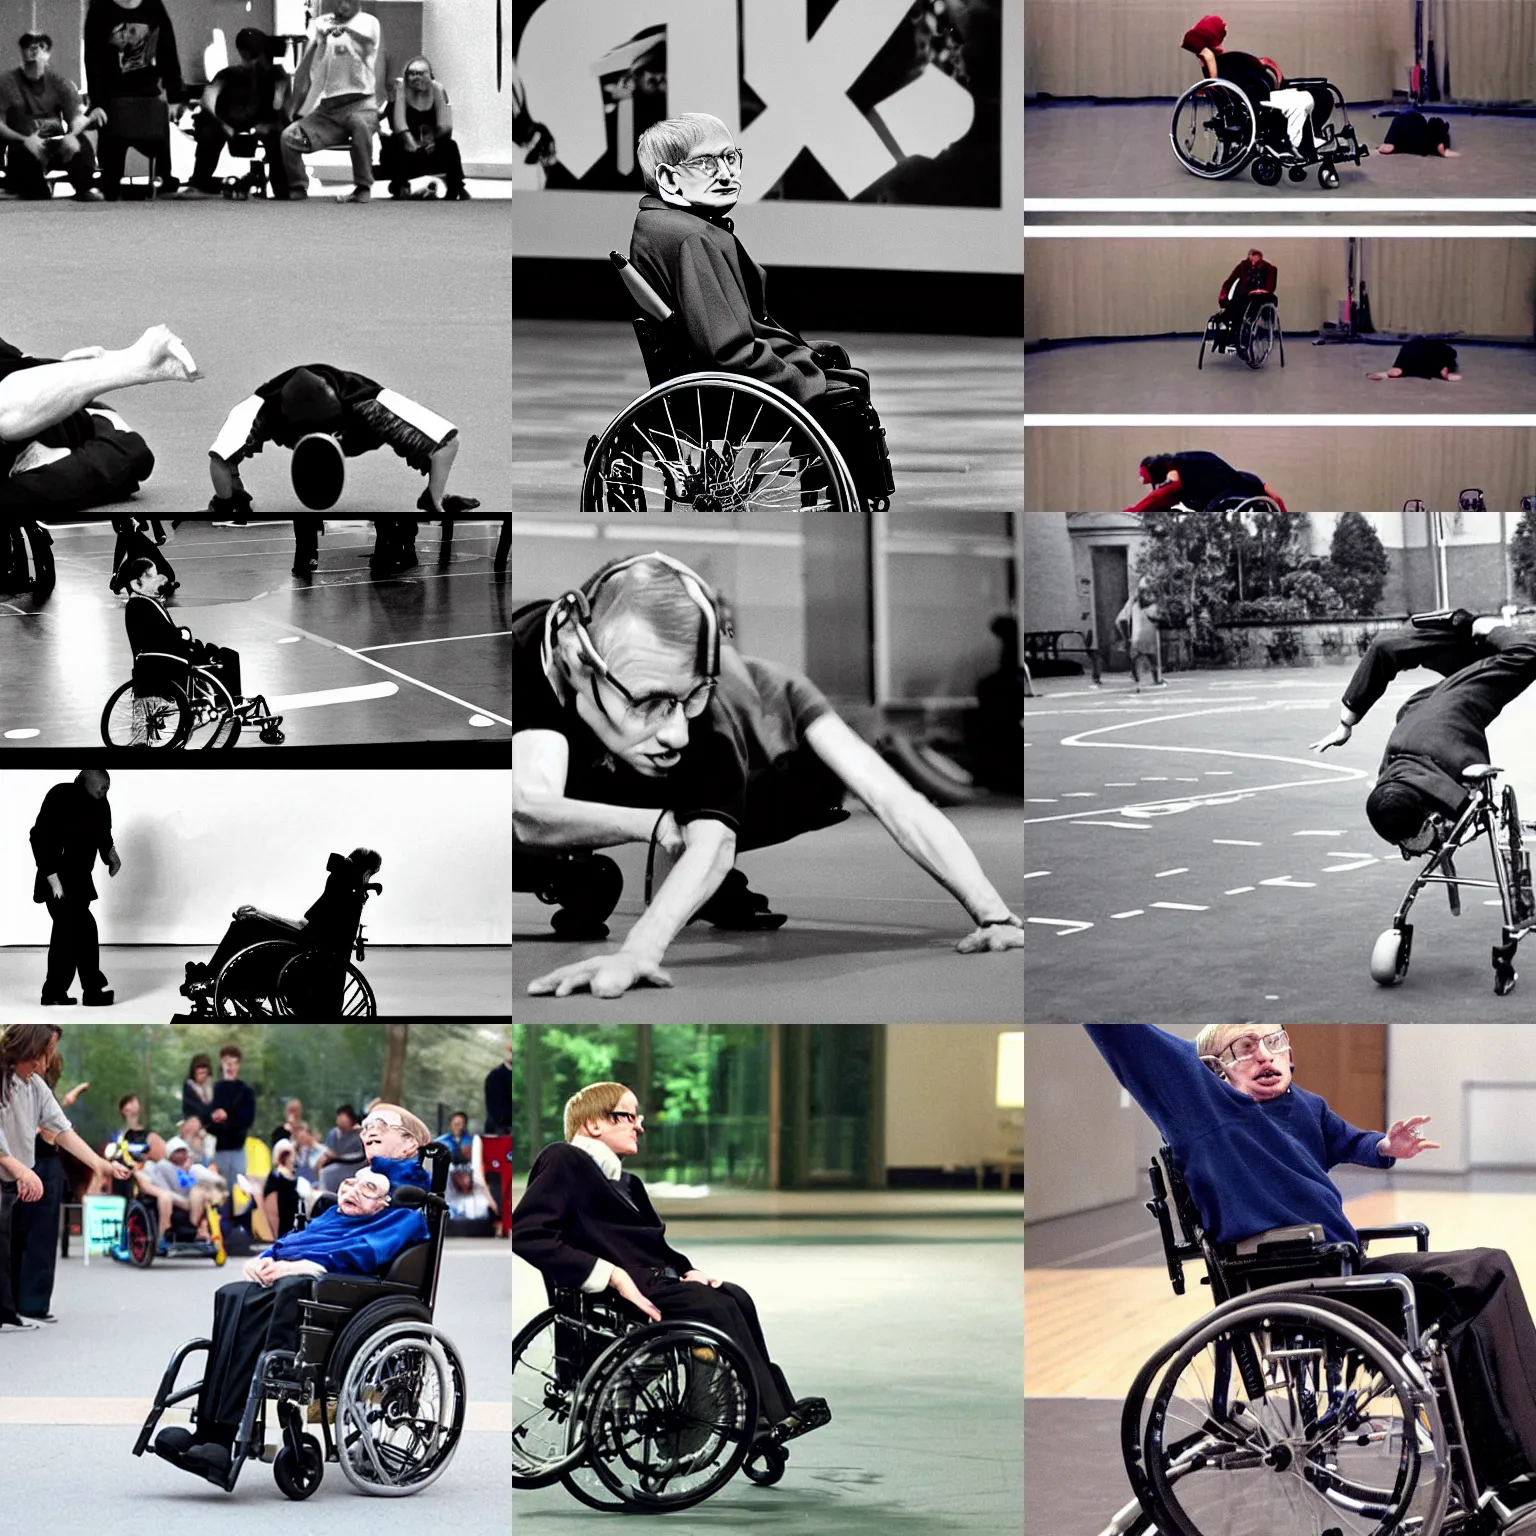 Prompt: Stephen Hawking wheelchair breakdance scene